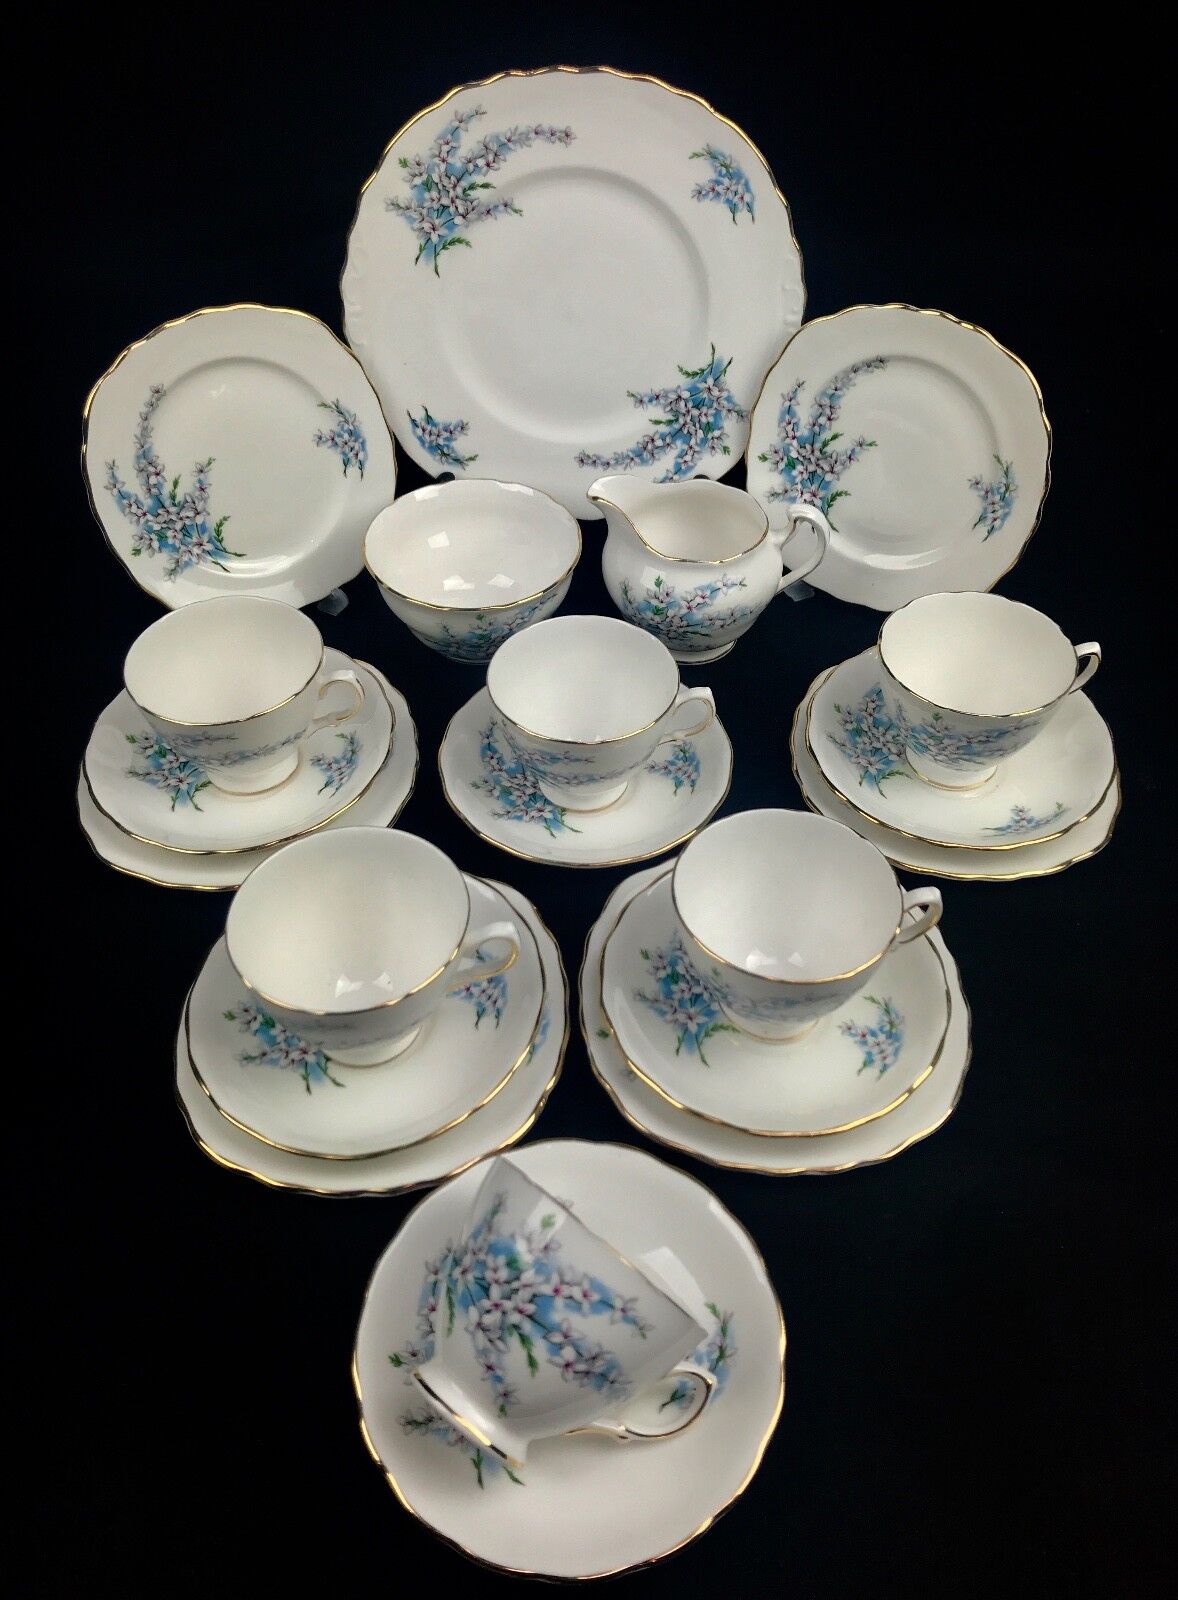 Royal Osborne Vintage Tea Set Blue / White / Floral / 8203 / Trio / Cup